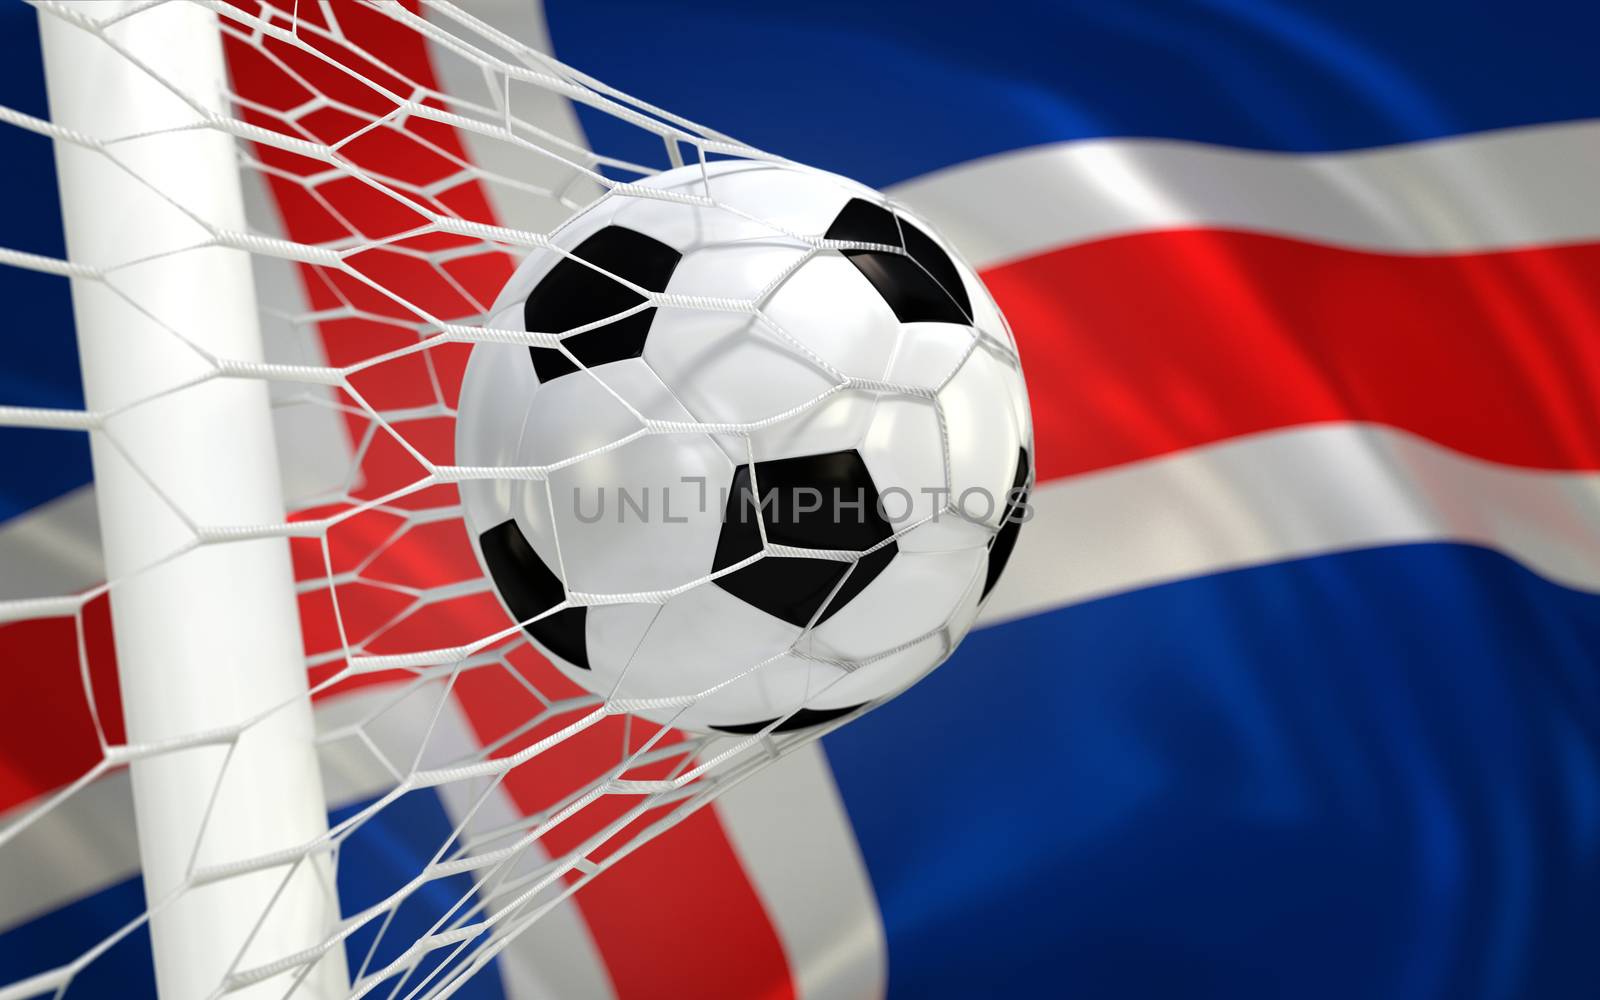 Iceland waving flag and soccer ball in goal net by Barbraford